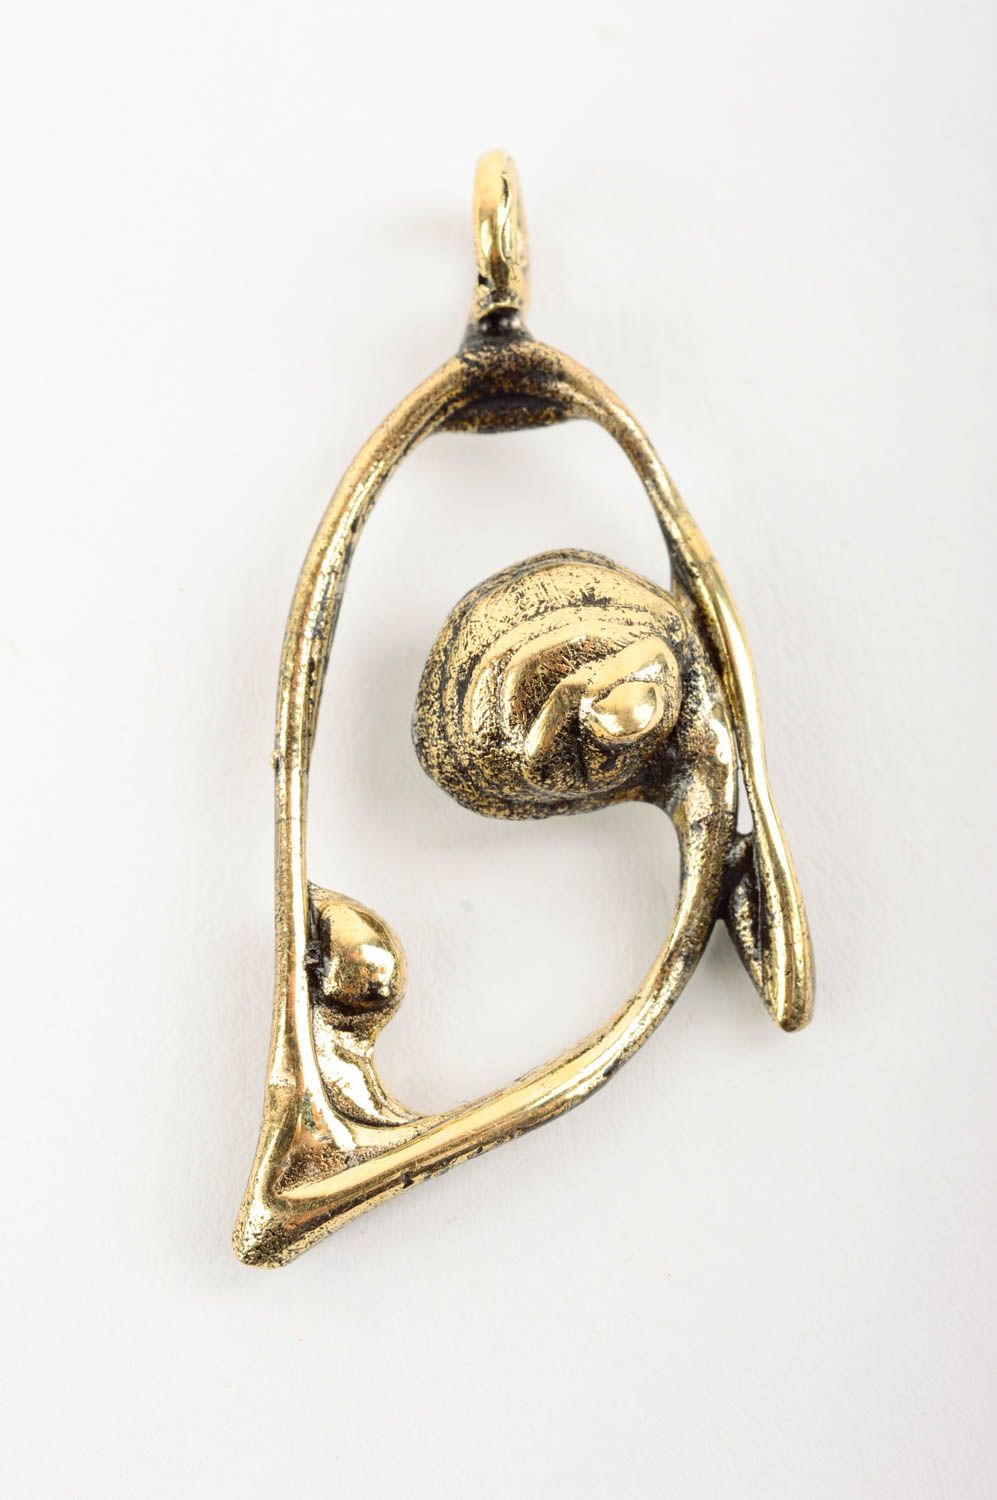 Handmade brass pendant designer stylish necklace metal jewelry present photo 1